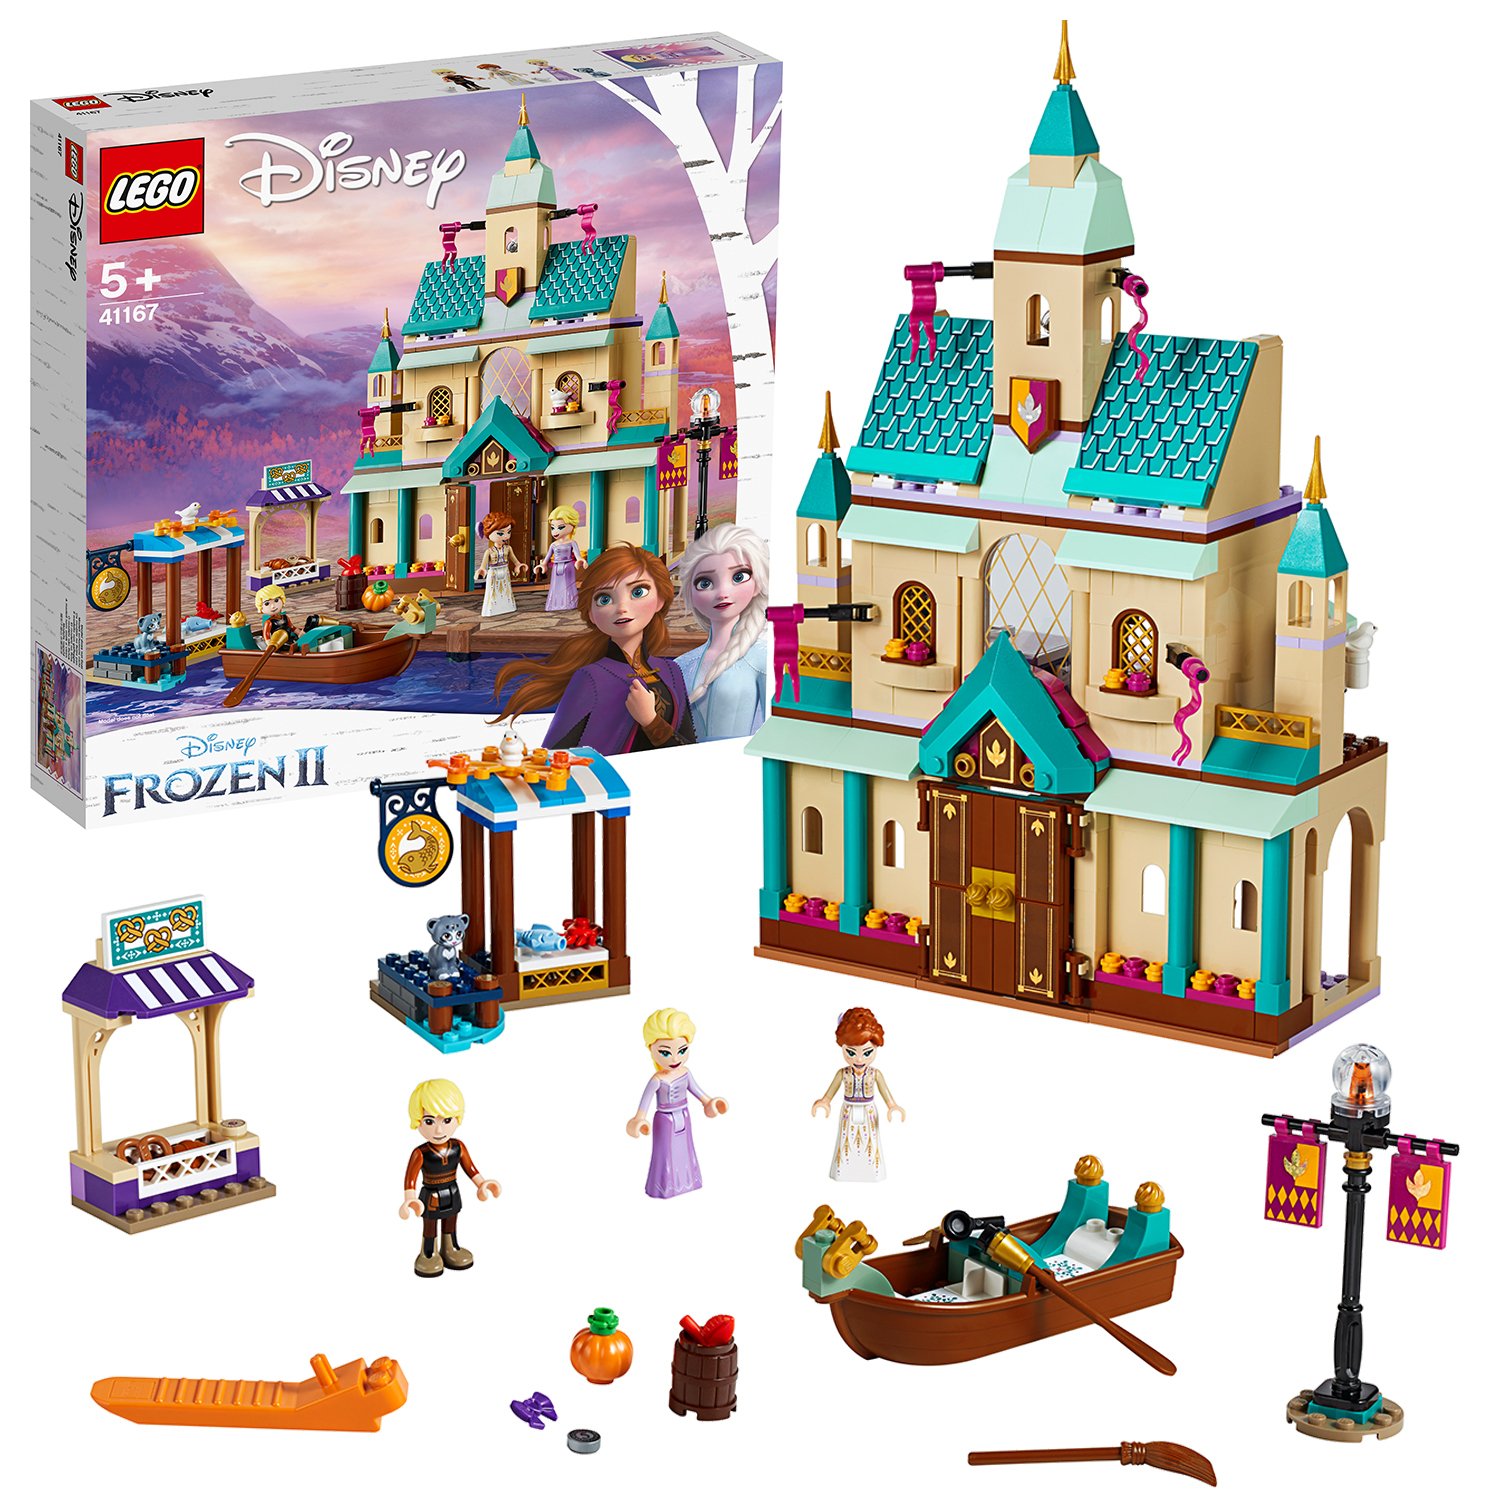 LEGO Disney Frozen II Arendelle Castle Village Toy - 41167